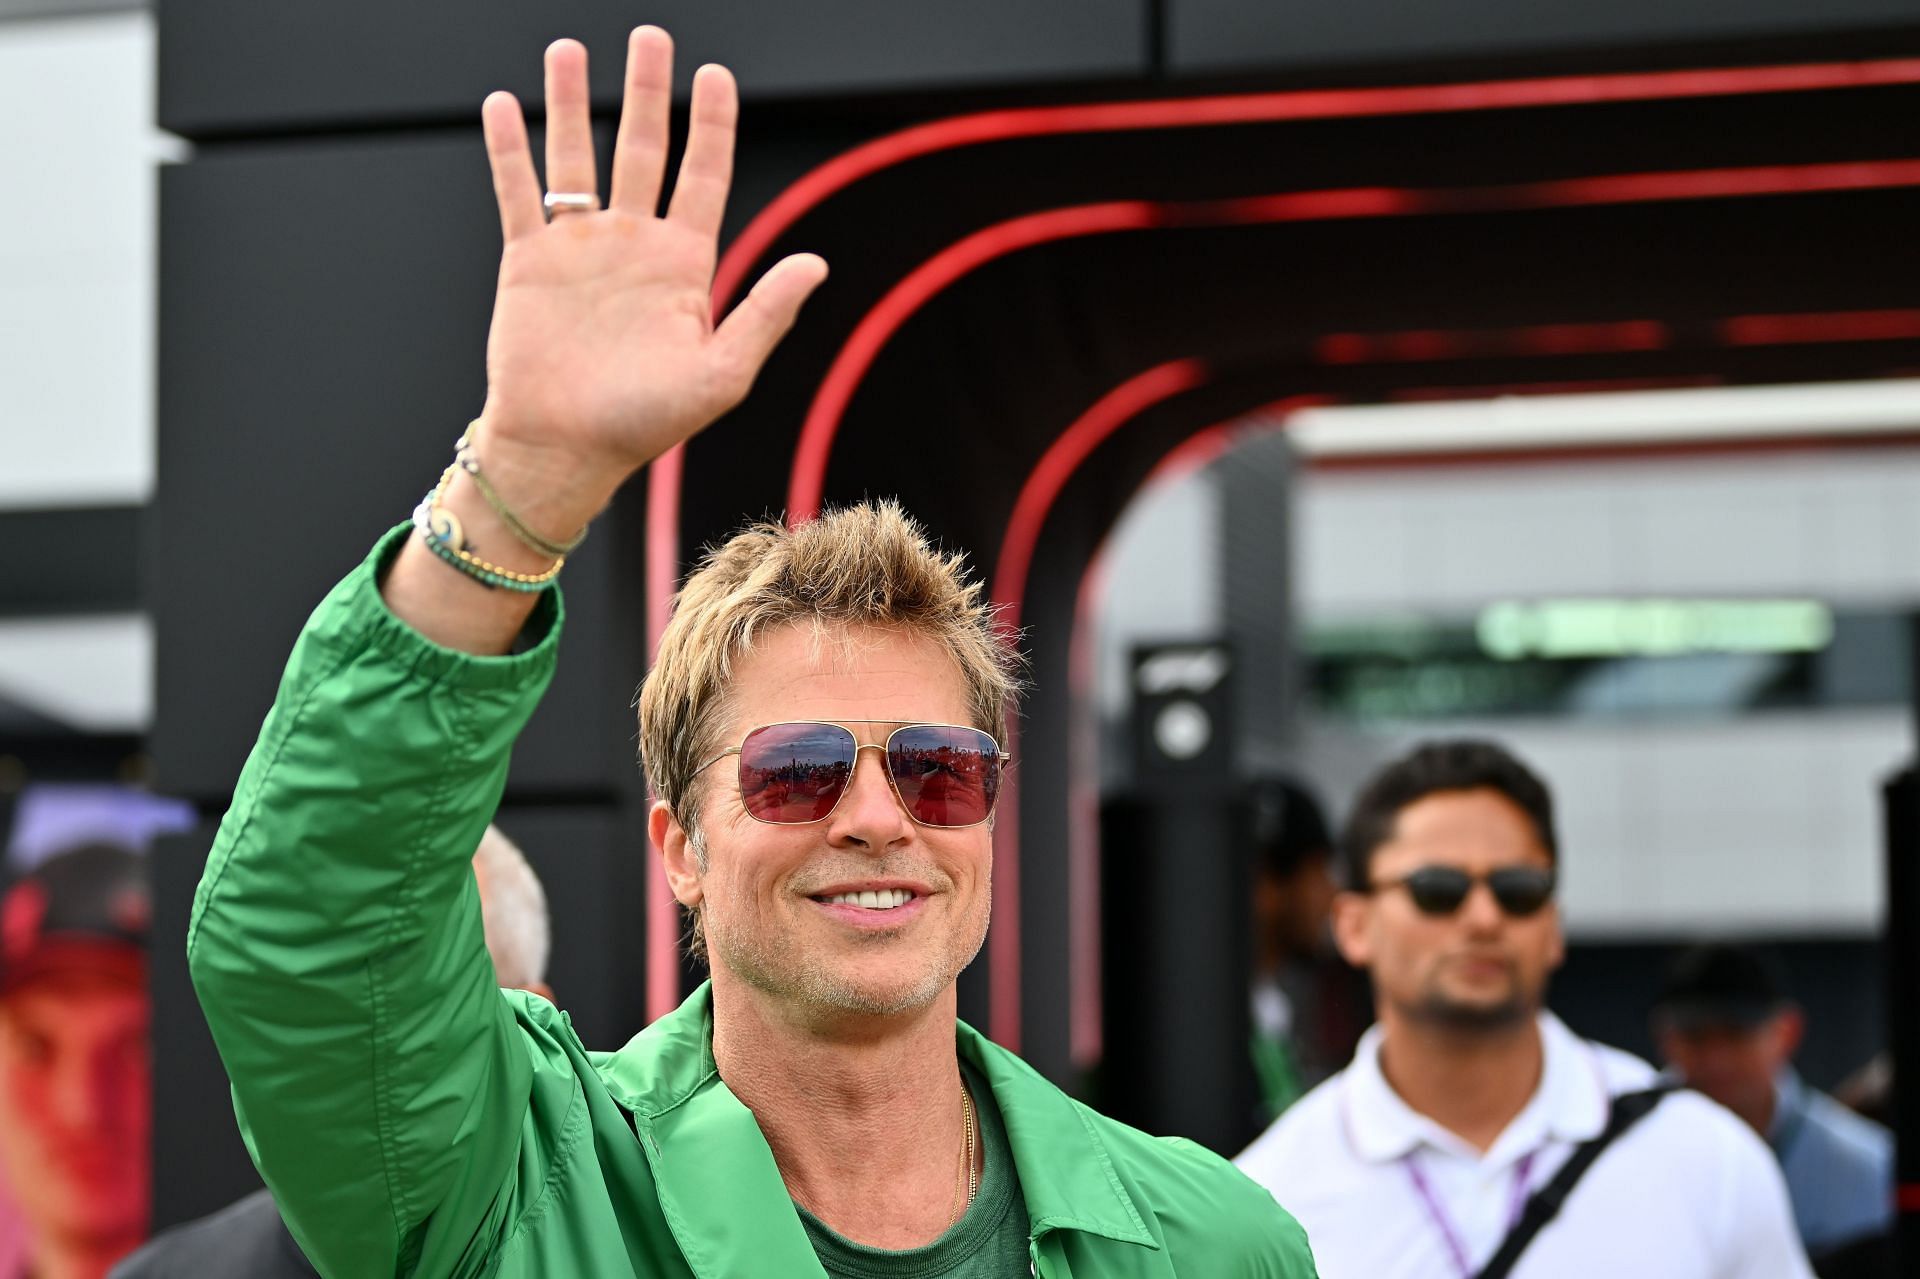 Brad Pitt at the F1 paddock during the British GP (Photo by Dan Mullan/Getty Images)